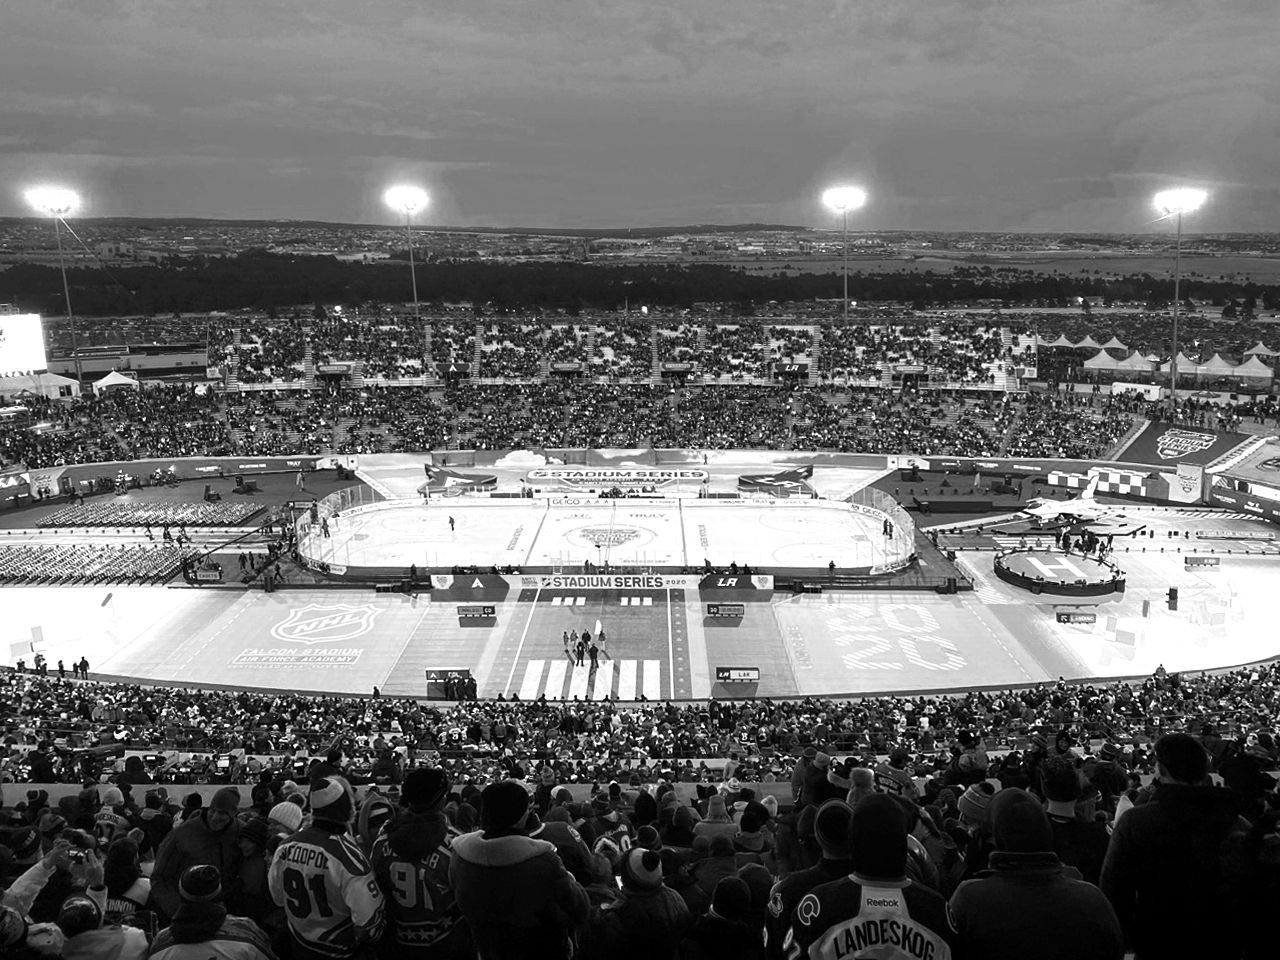 US Air Force Academy Stadium in Colorado Springs